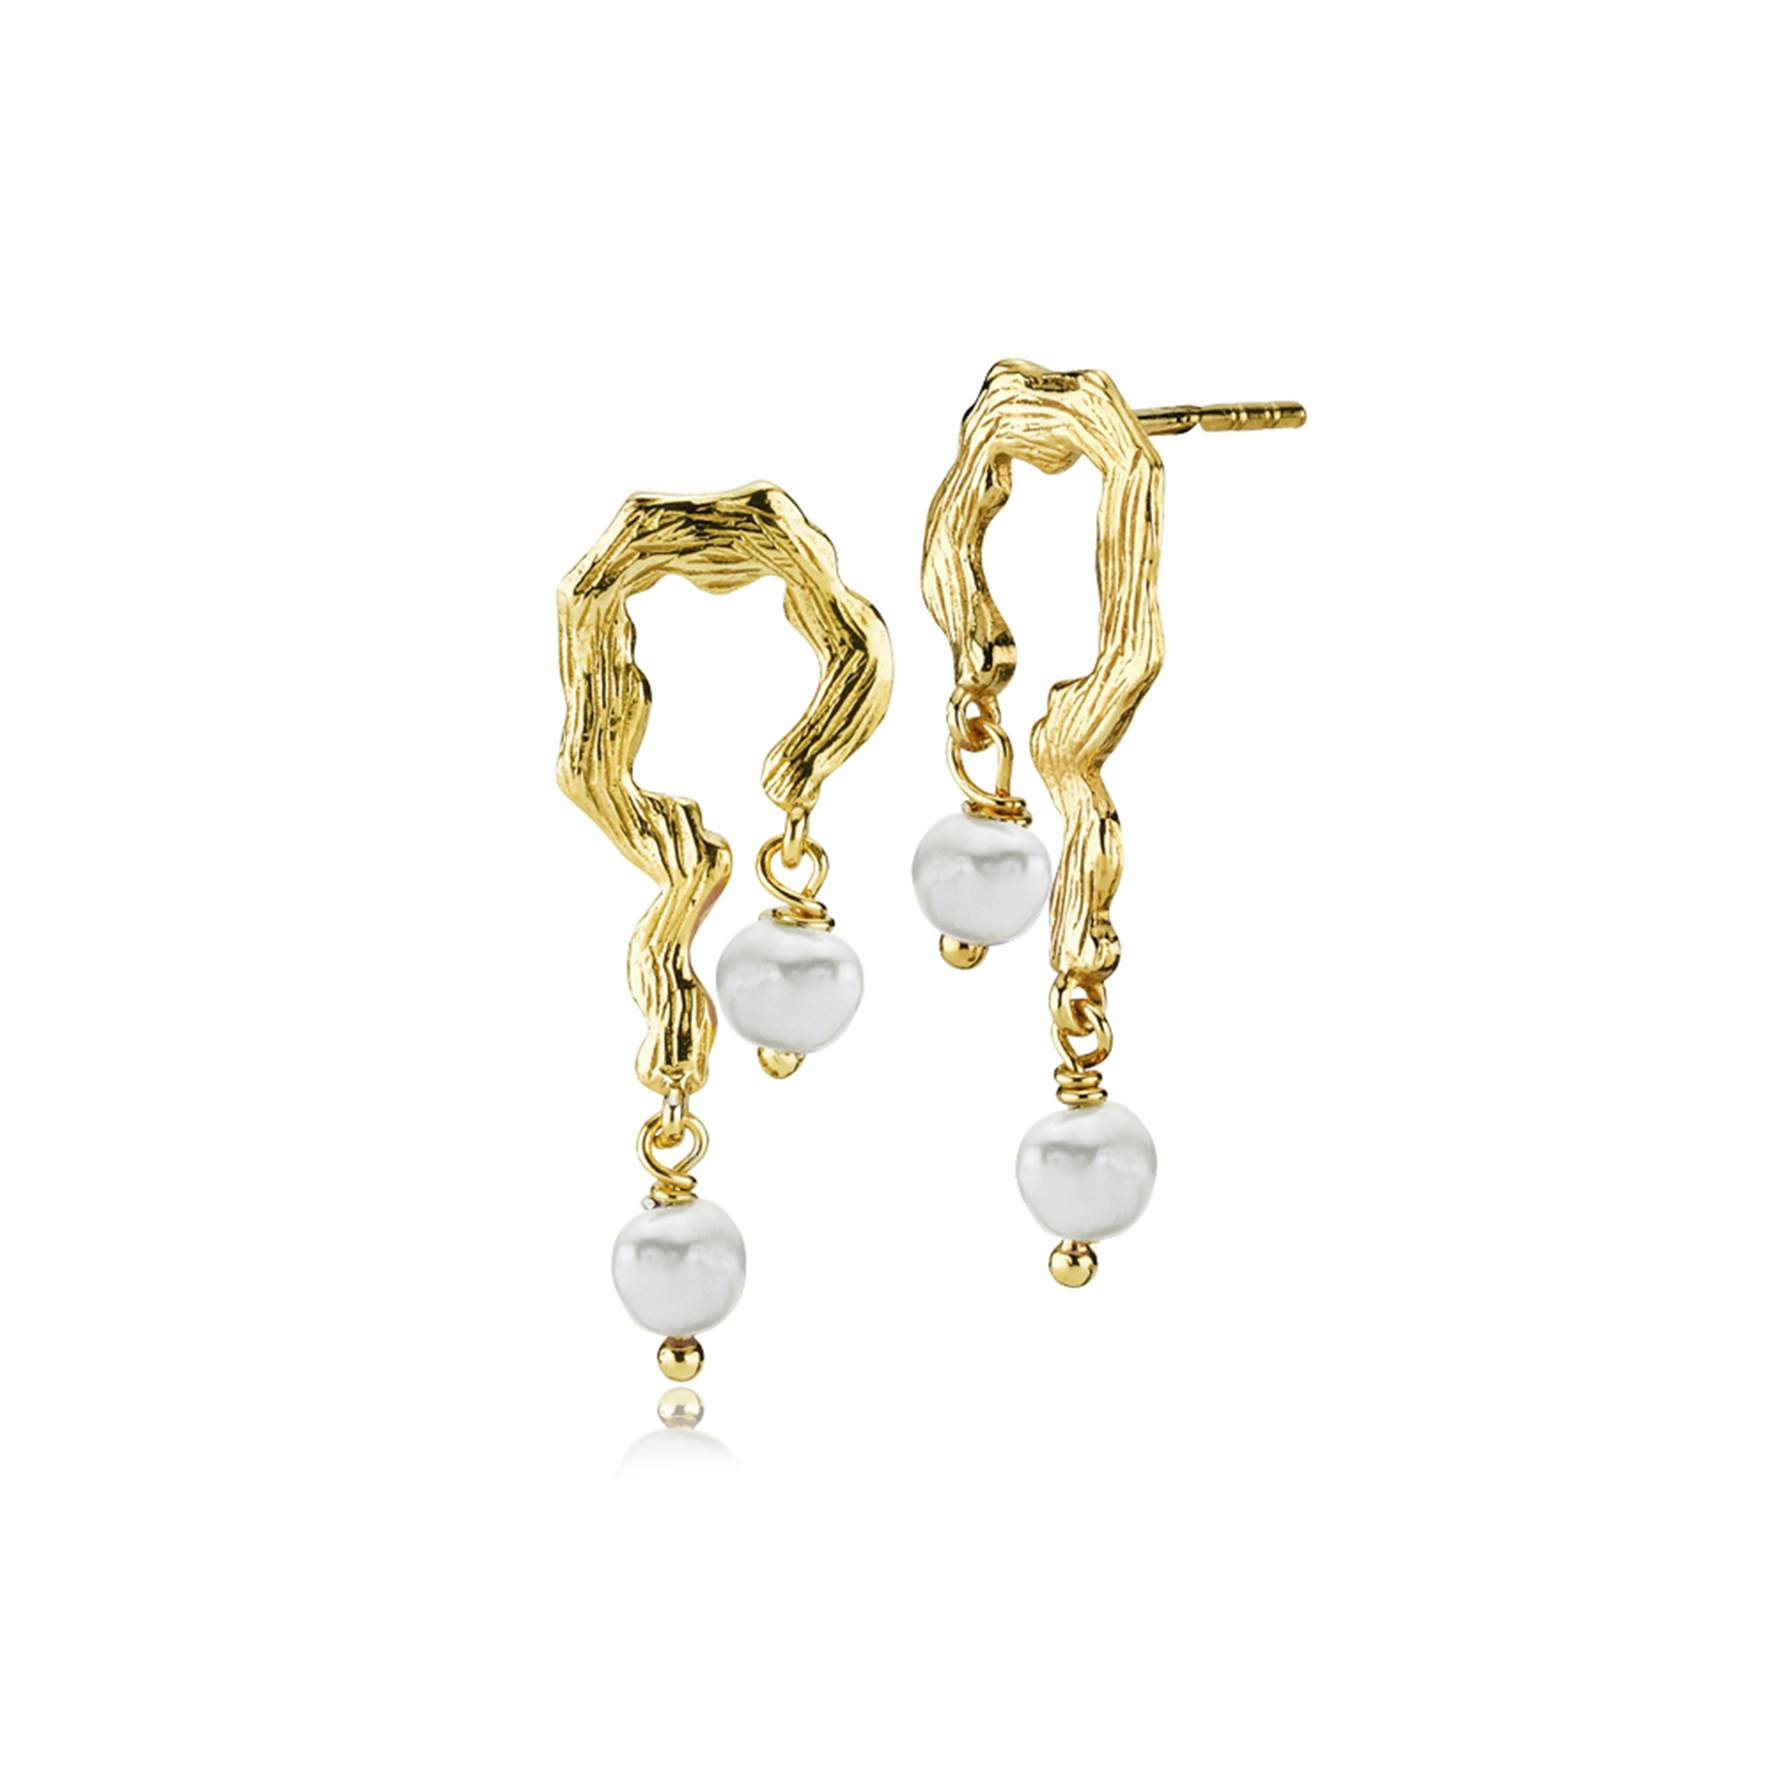 Lærke Bentsen By Sistie Earrings With Pearls fra Sistie i Forgyldt-Sølv Sterling 925|Freshwater Pearl